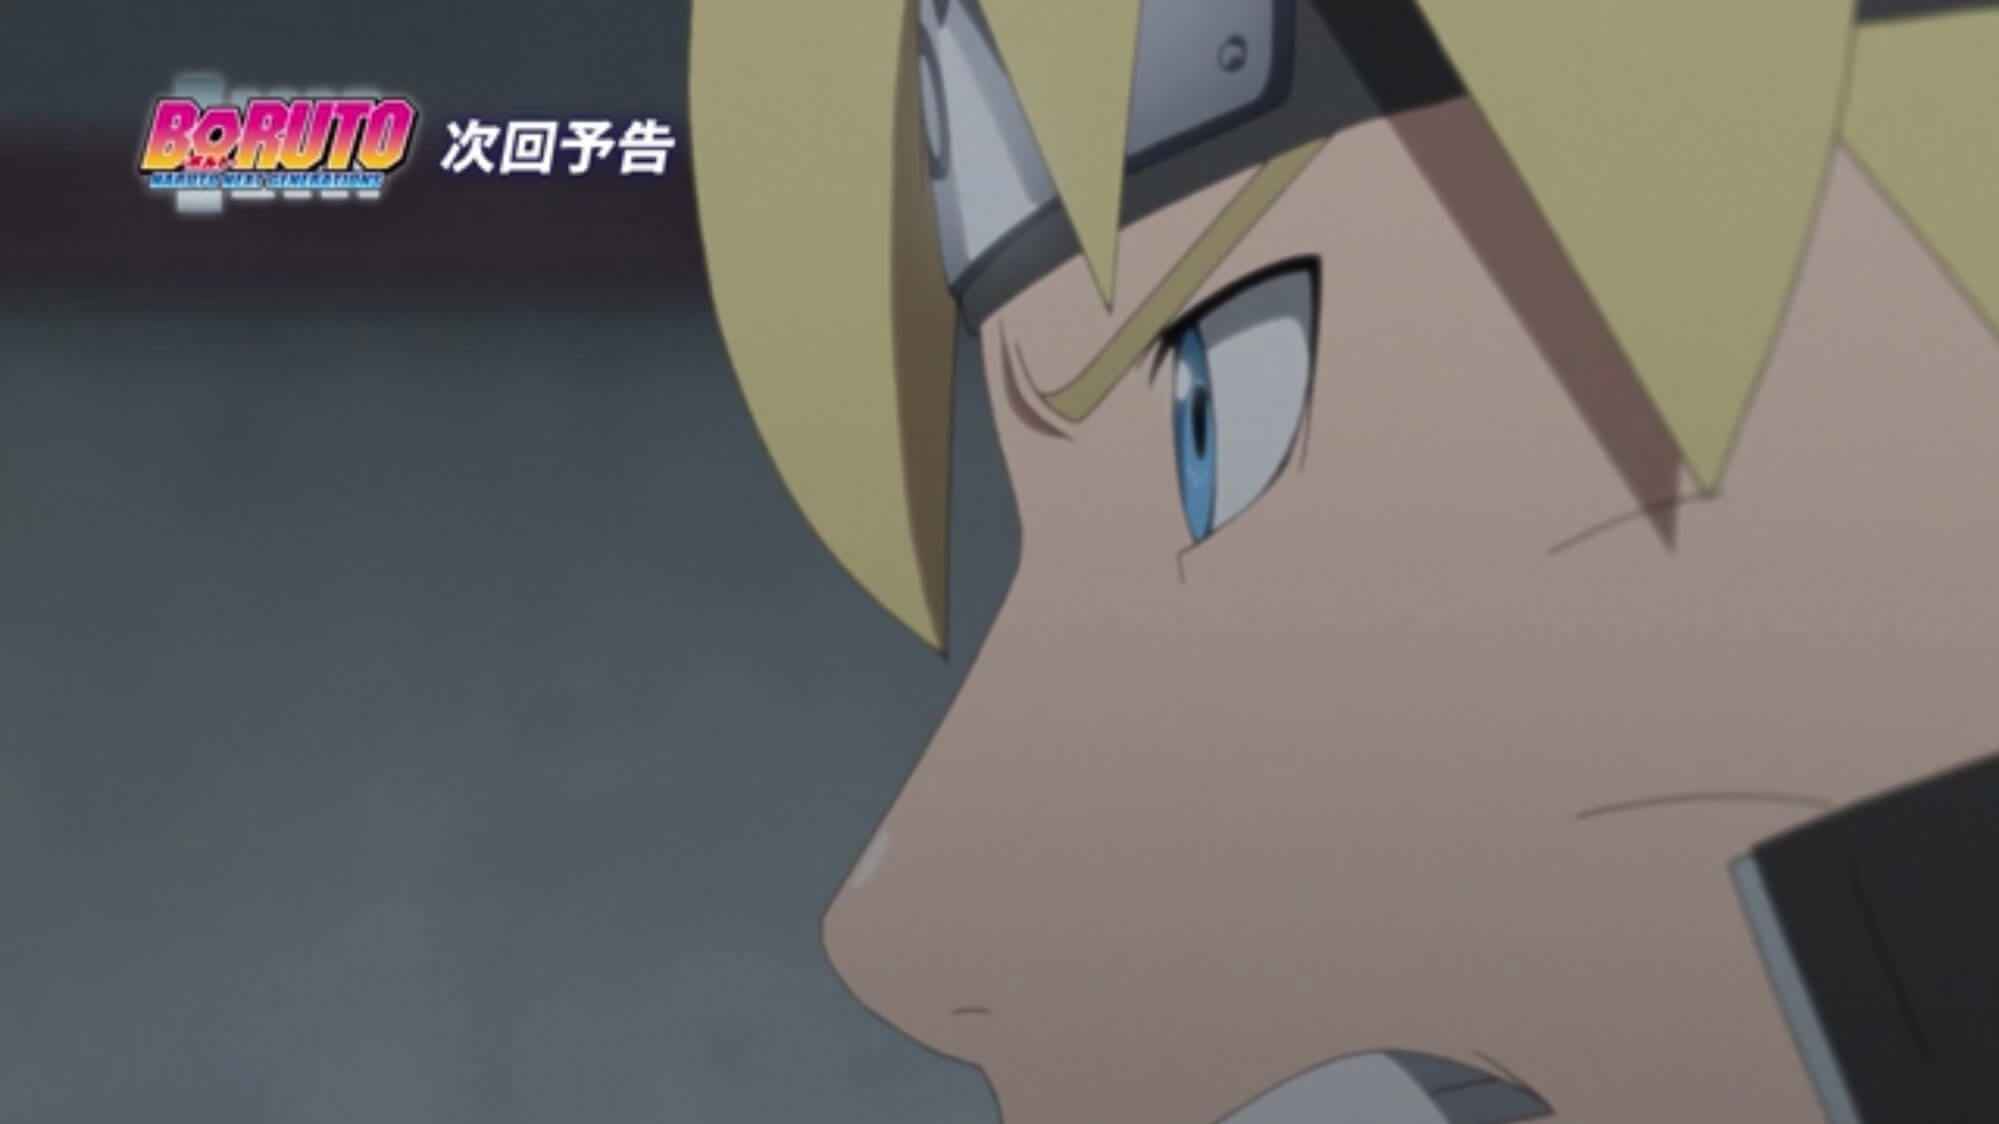 Boruto: Naruto Next Generations Episode 151